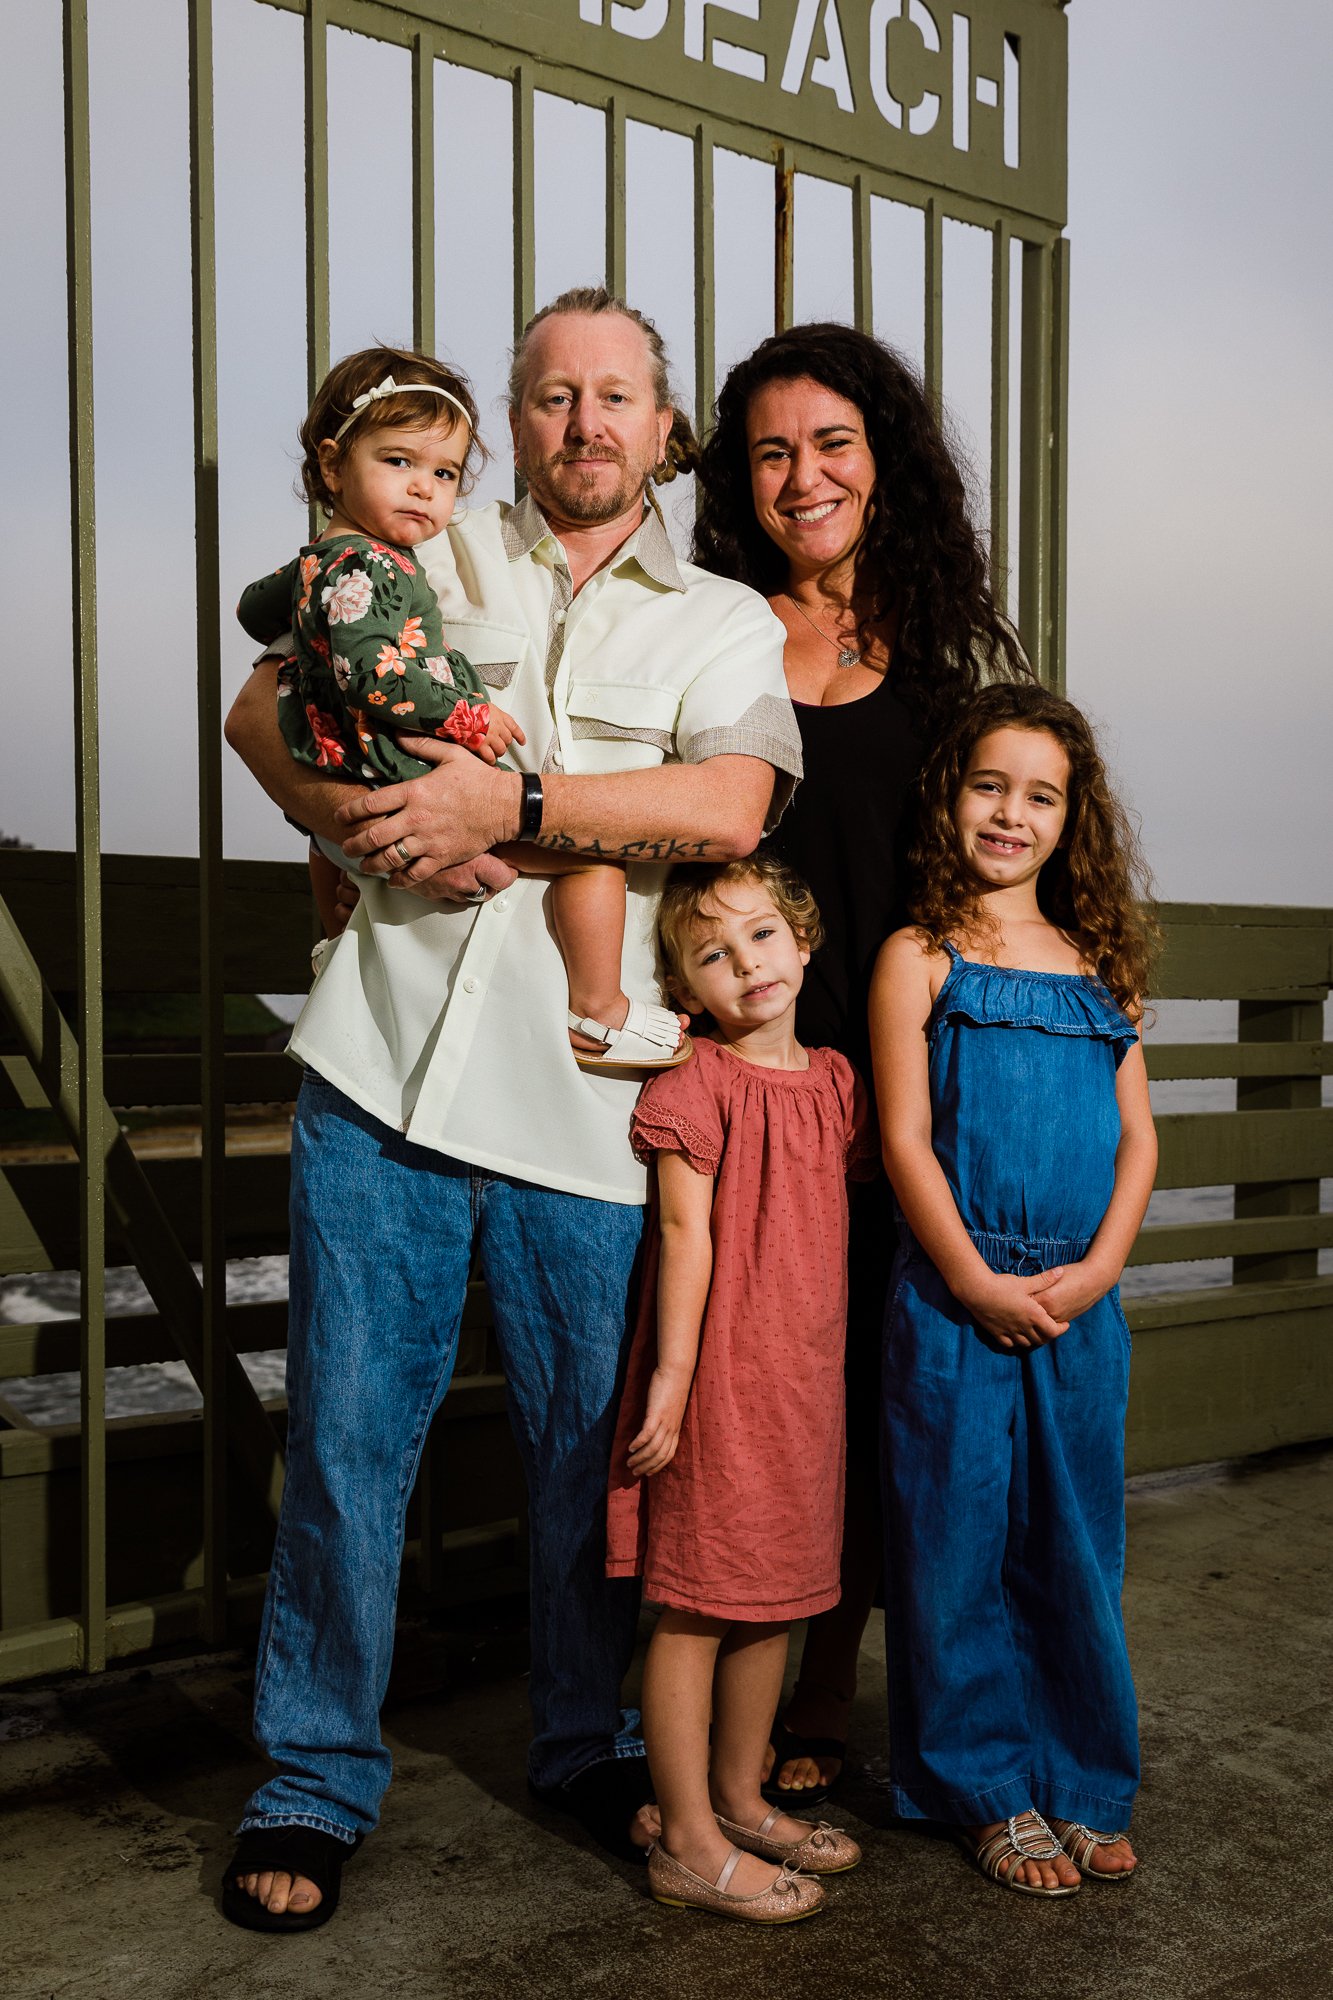 Family Portrait Photography Session at Ocean Beach Pier, San Diego, California-7.jpg